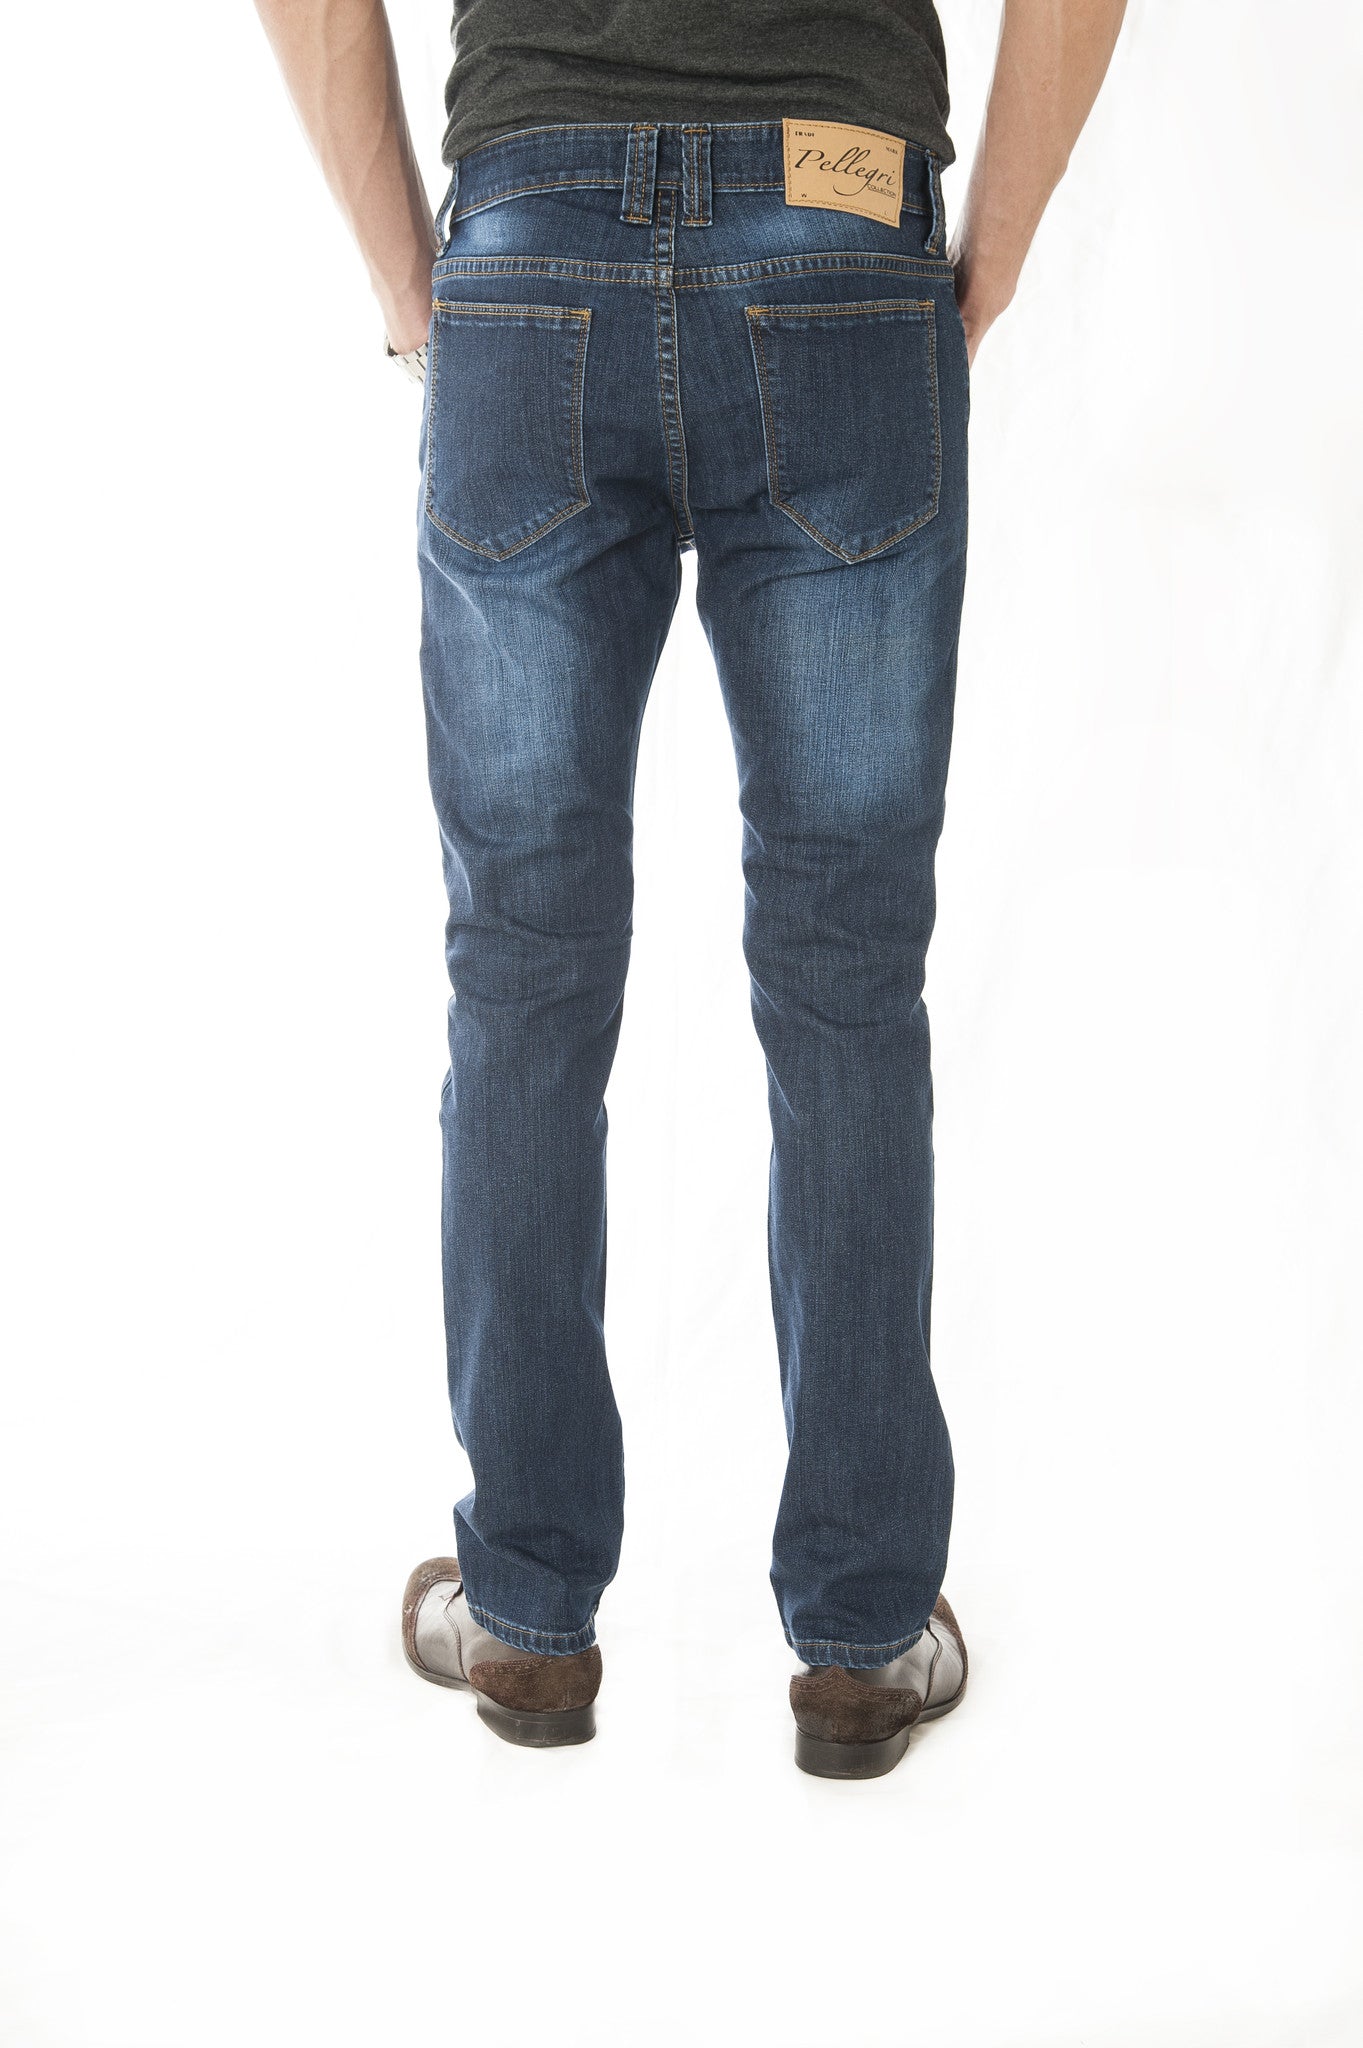 Pantalon Jeans Skinny Fit - Azul Escuro Cod: 200-2012